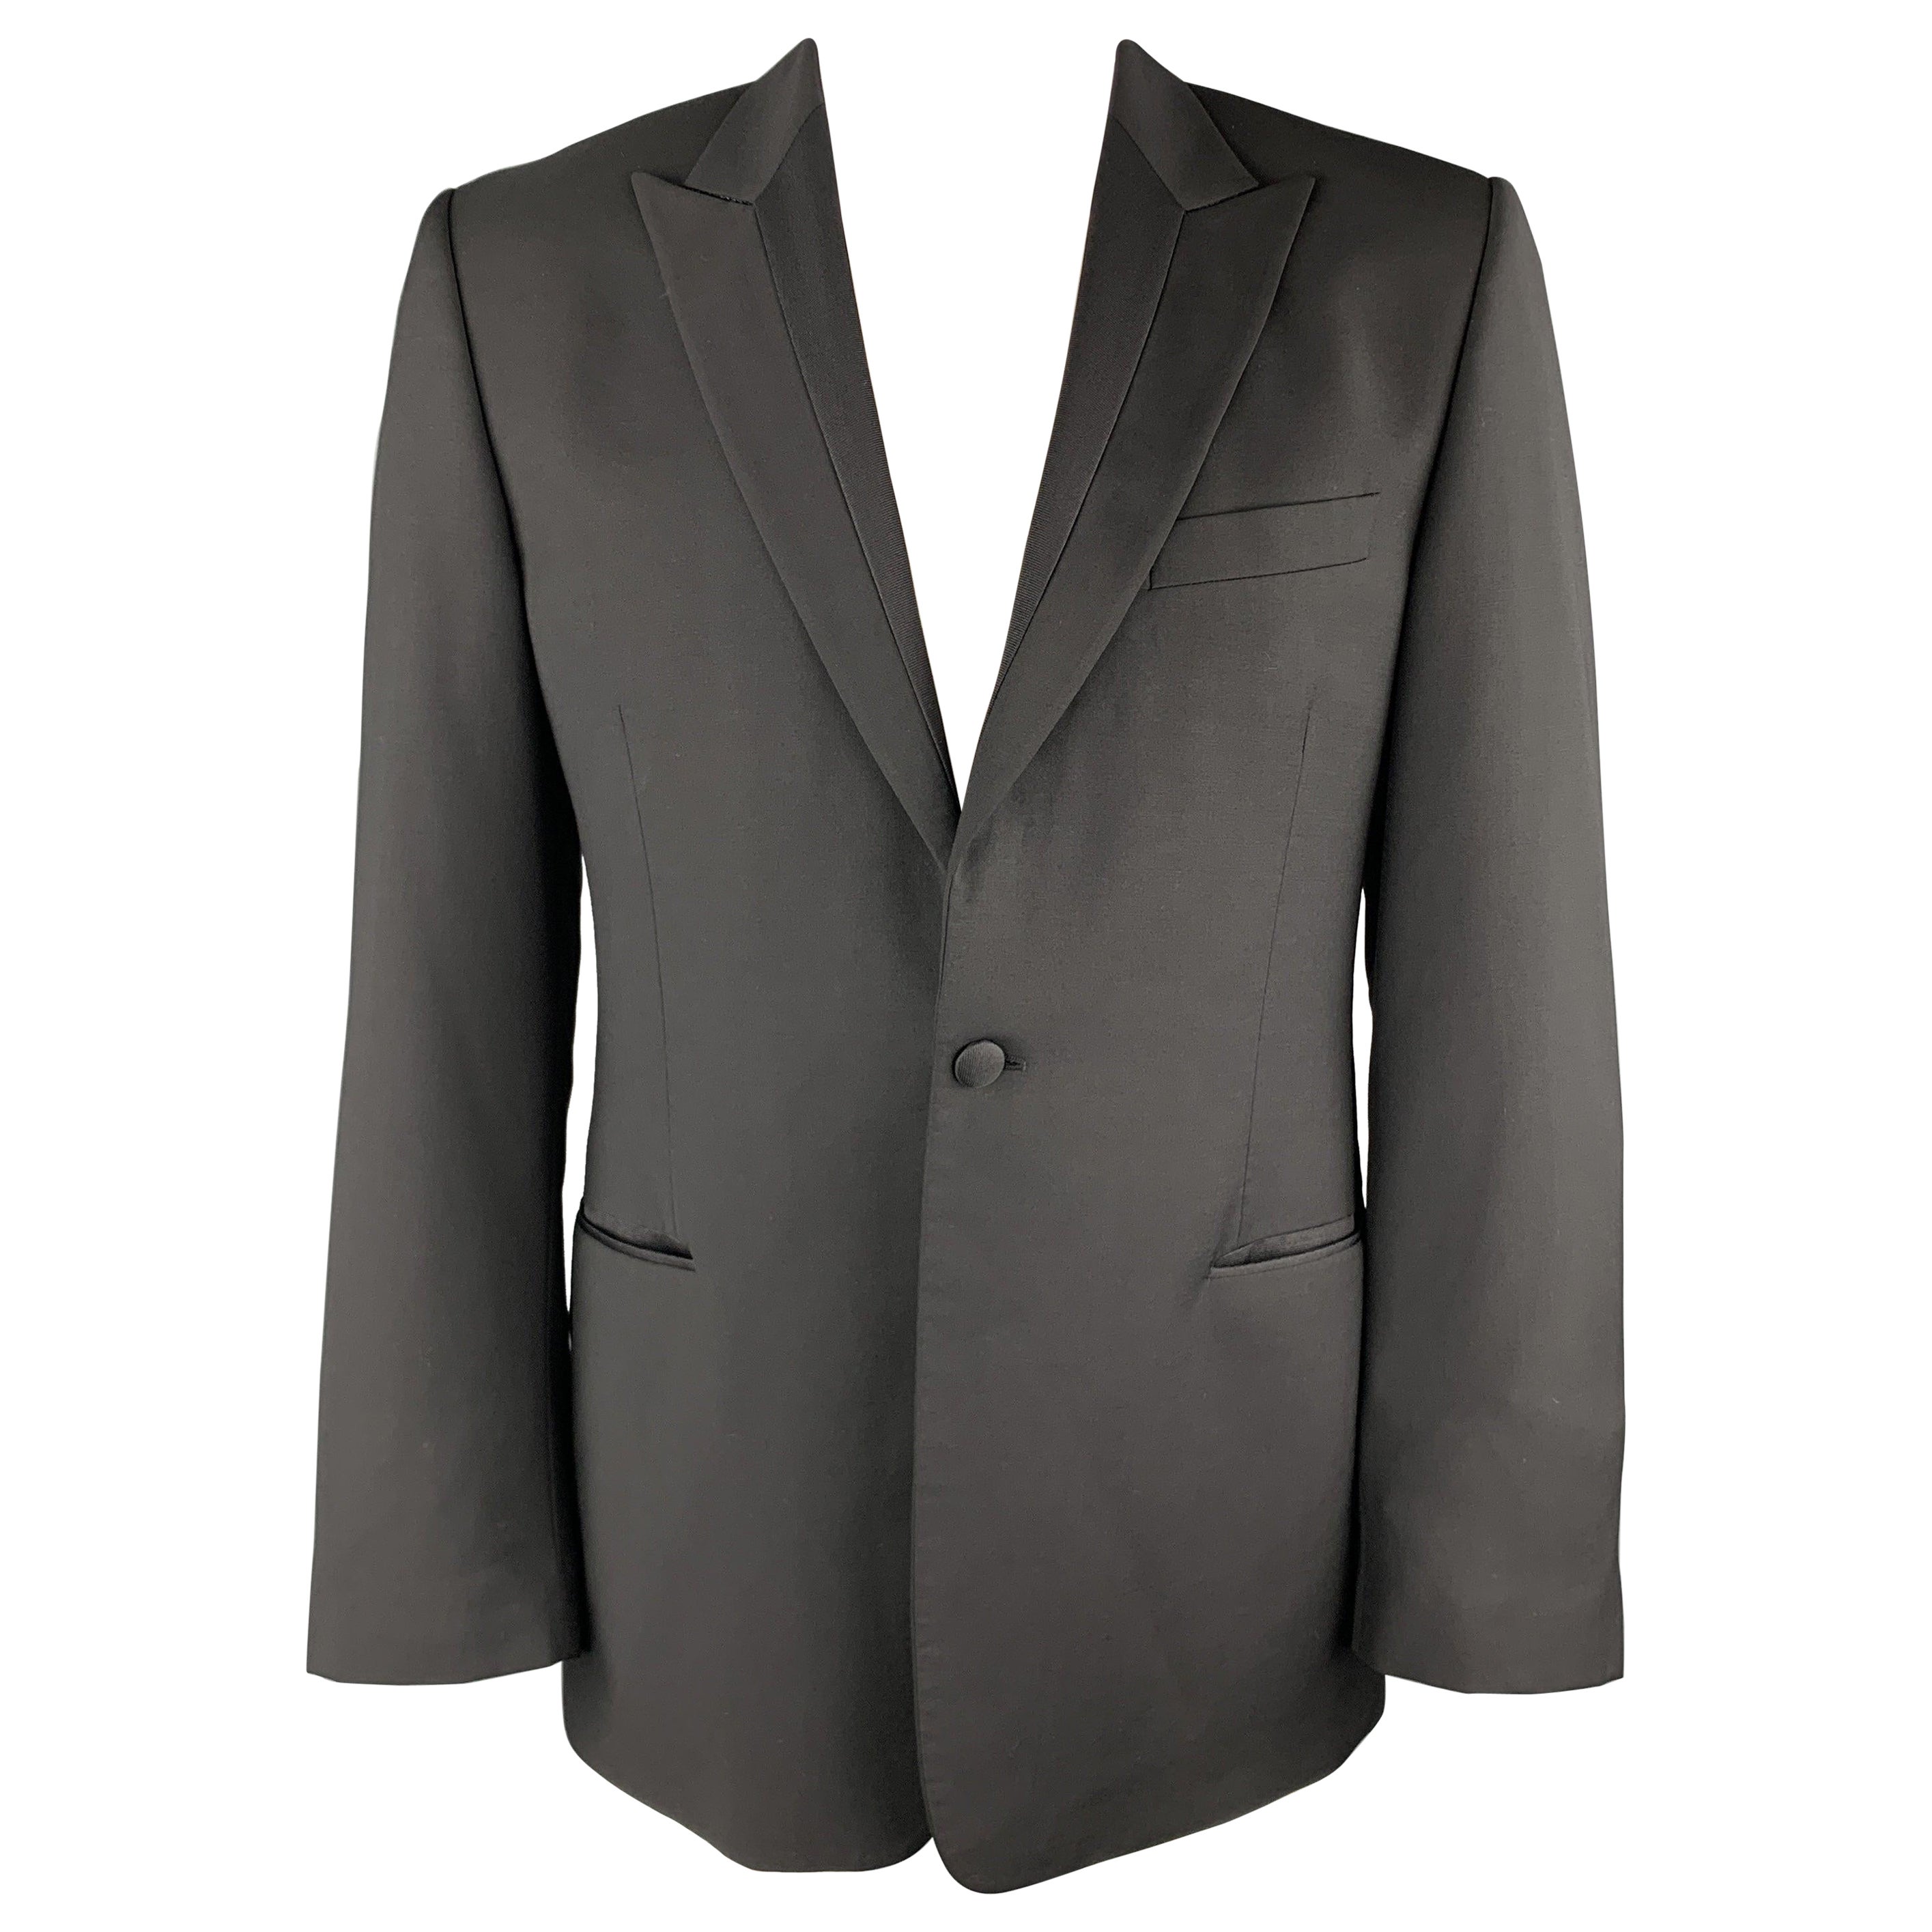 PAUL SMITH Size 42 Black Wool / Mohair Faille Detailed Peak Lapel Sport Coat For Sale